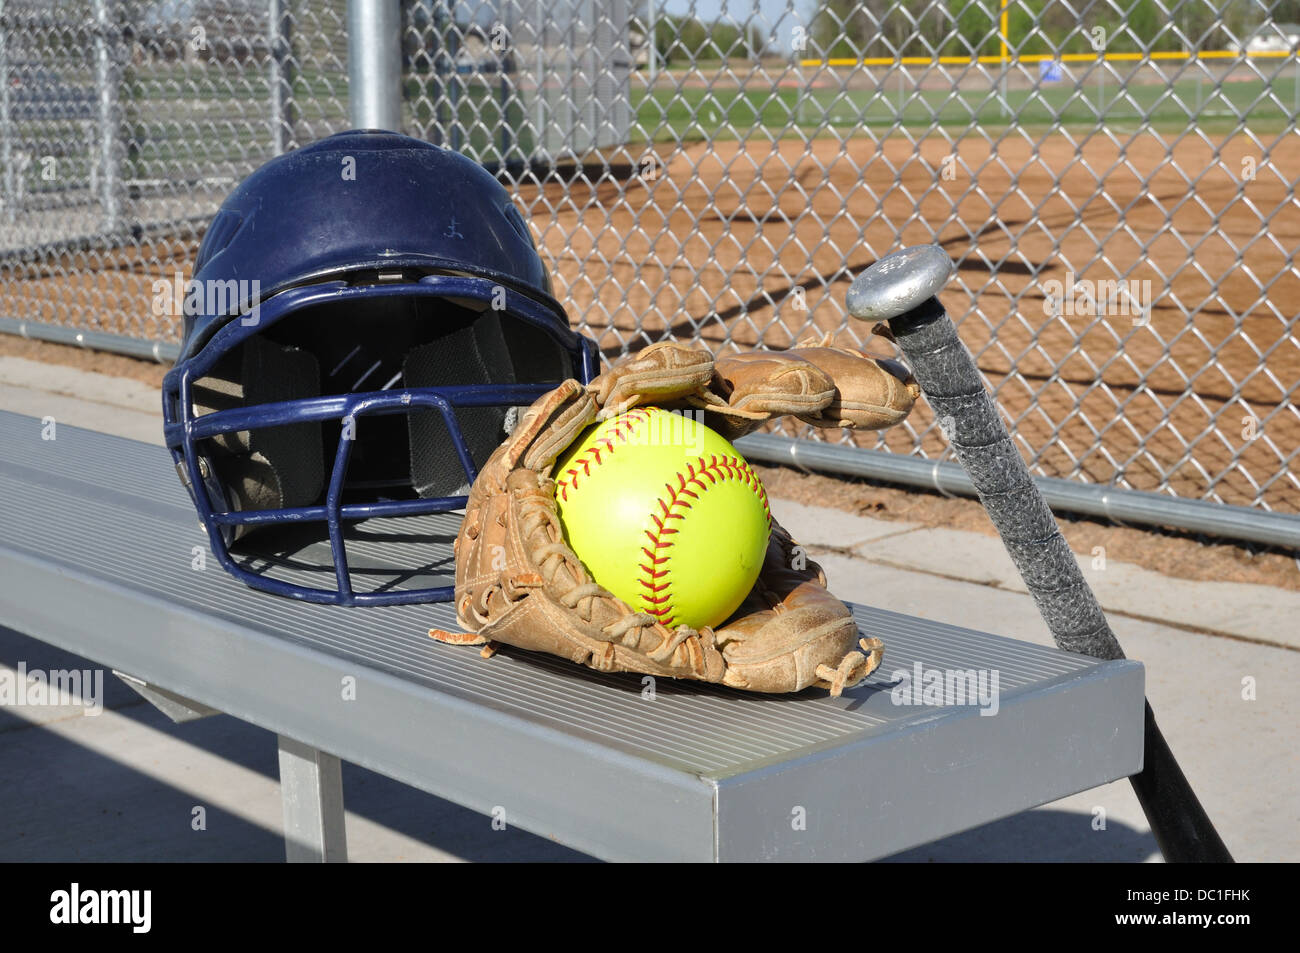 Softball-Schläger, Helm, Handschuhe und ball Stockfoto